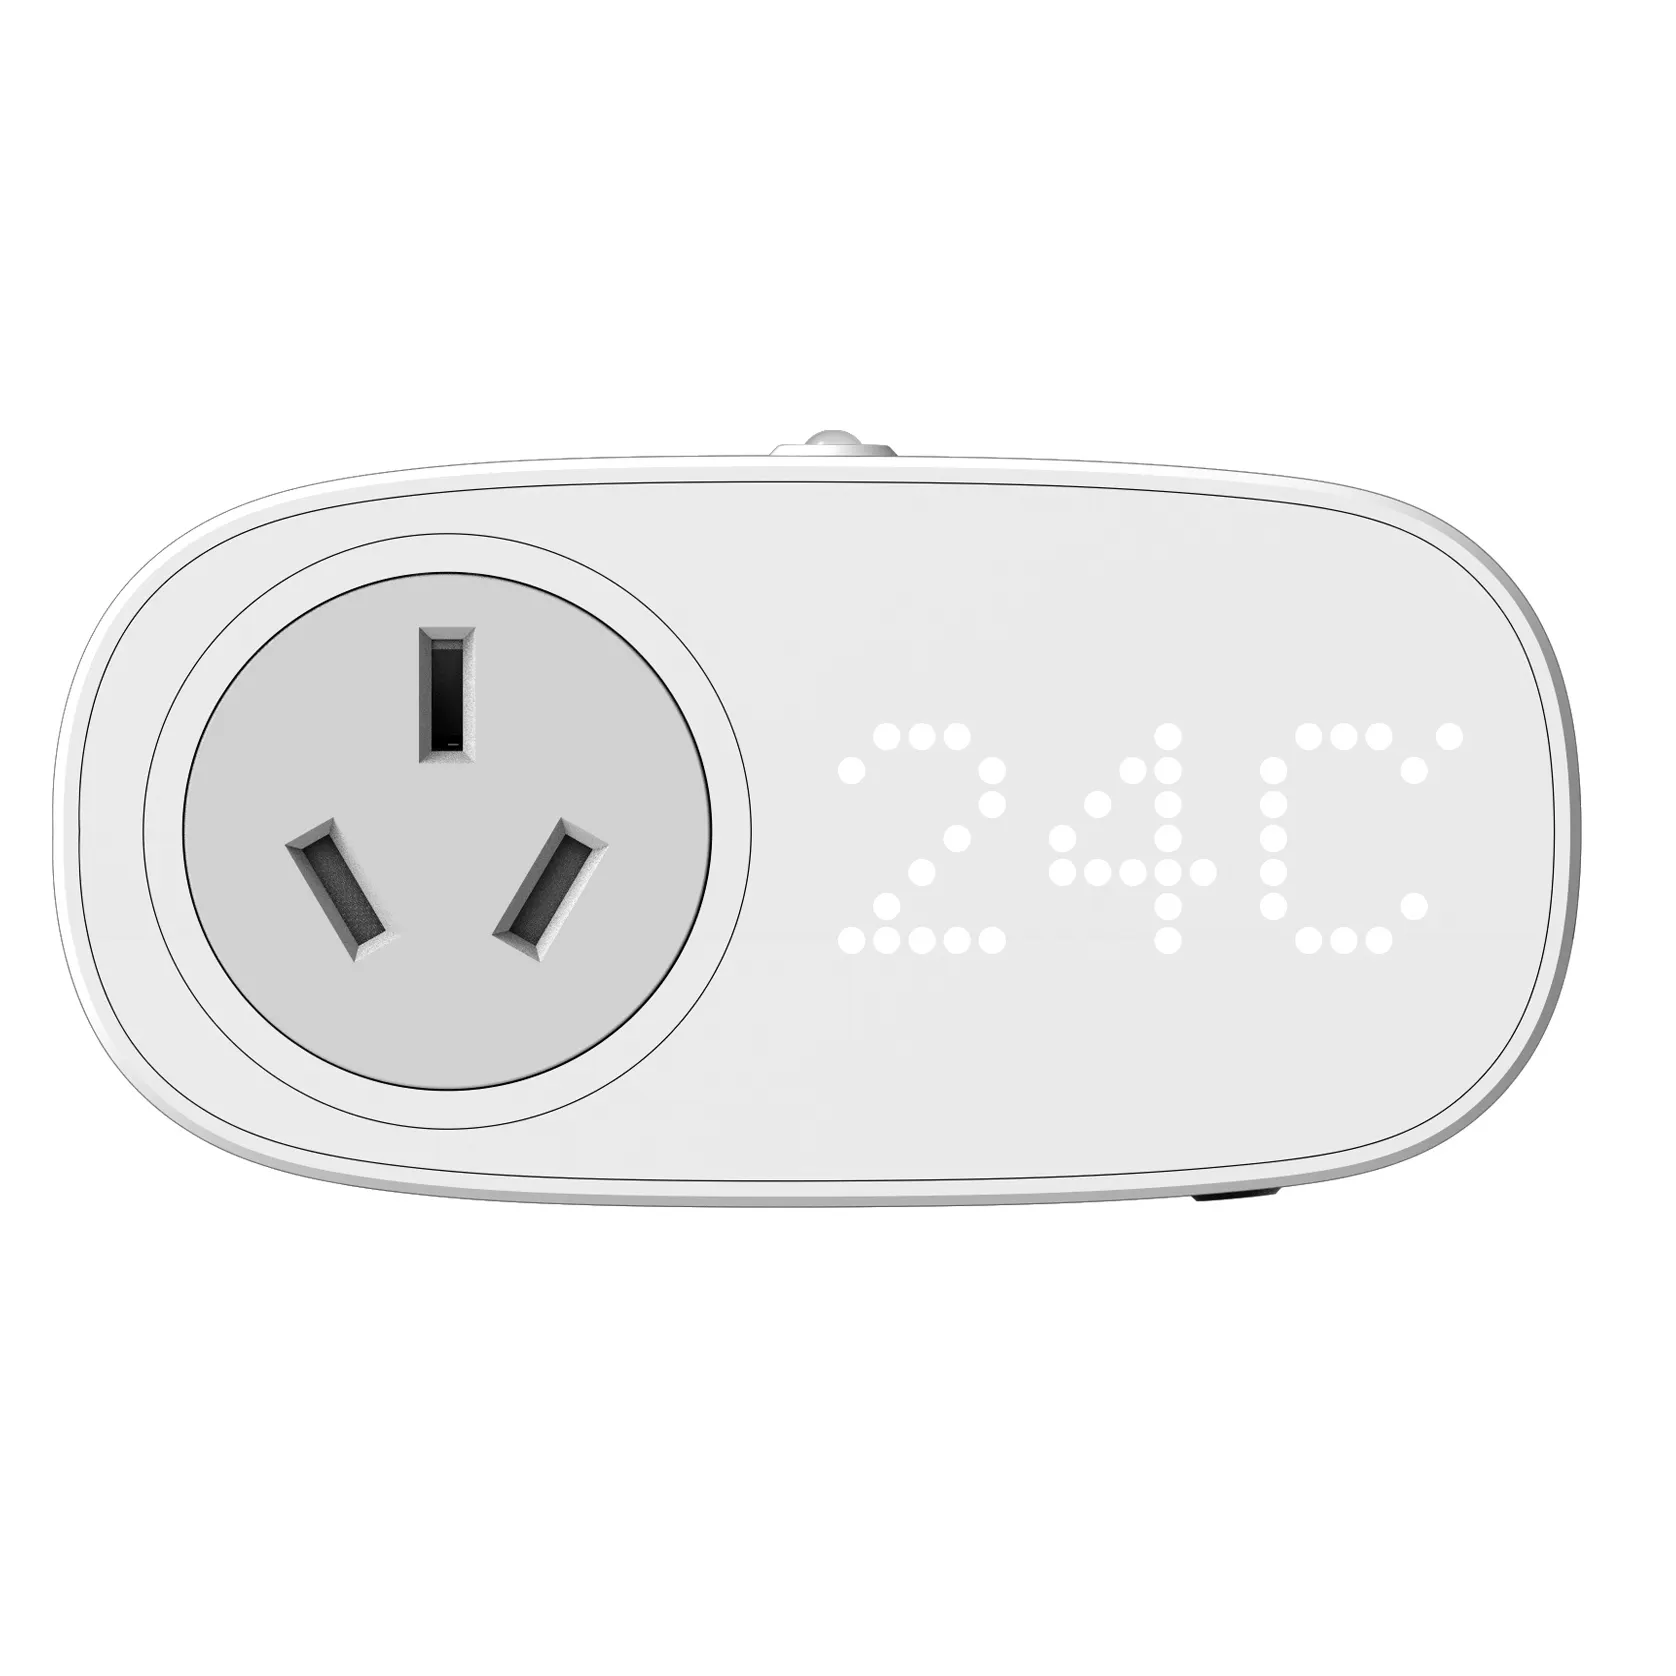 ZigBee IR blaster AC Control Temperature display and energy measurement from app